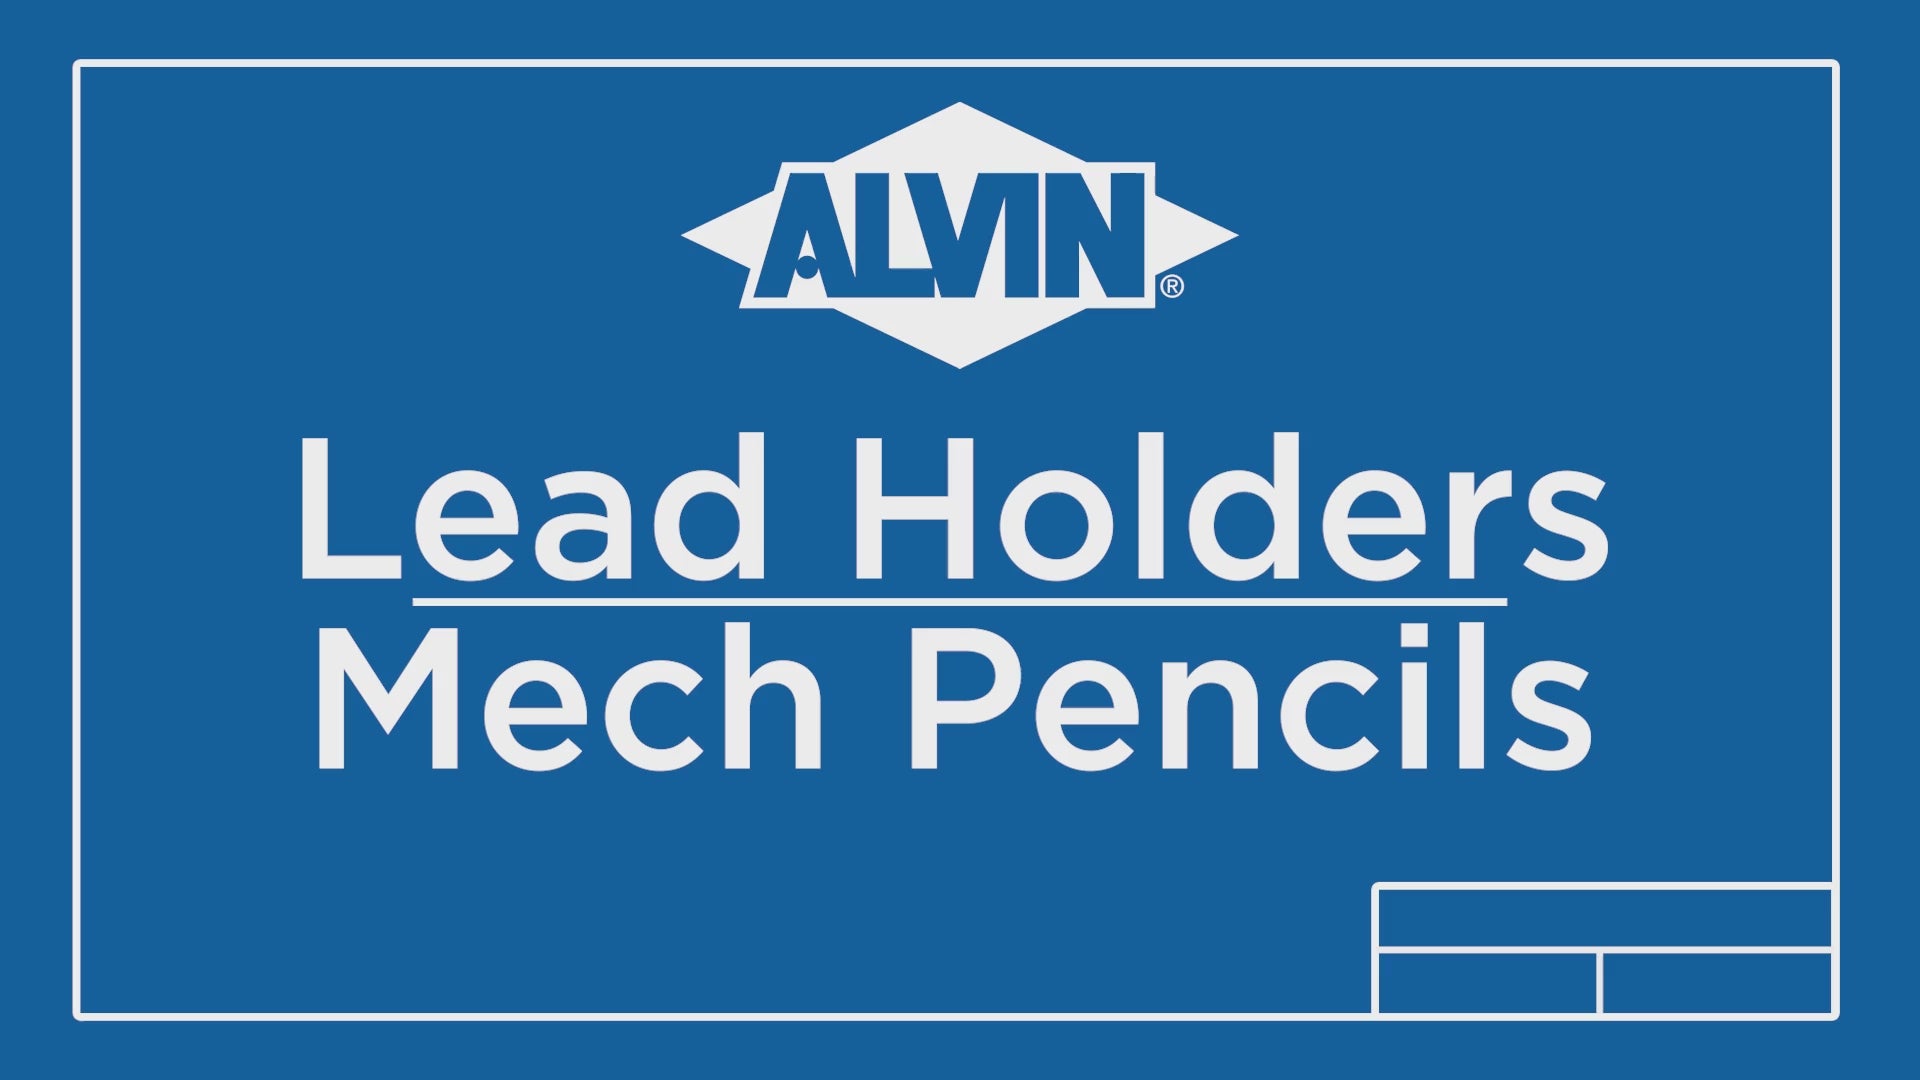 Alvin Draft/Matic Pencil